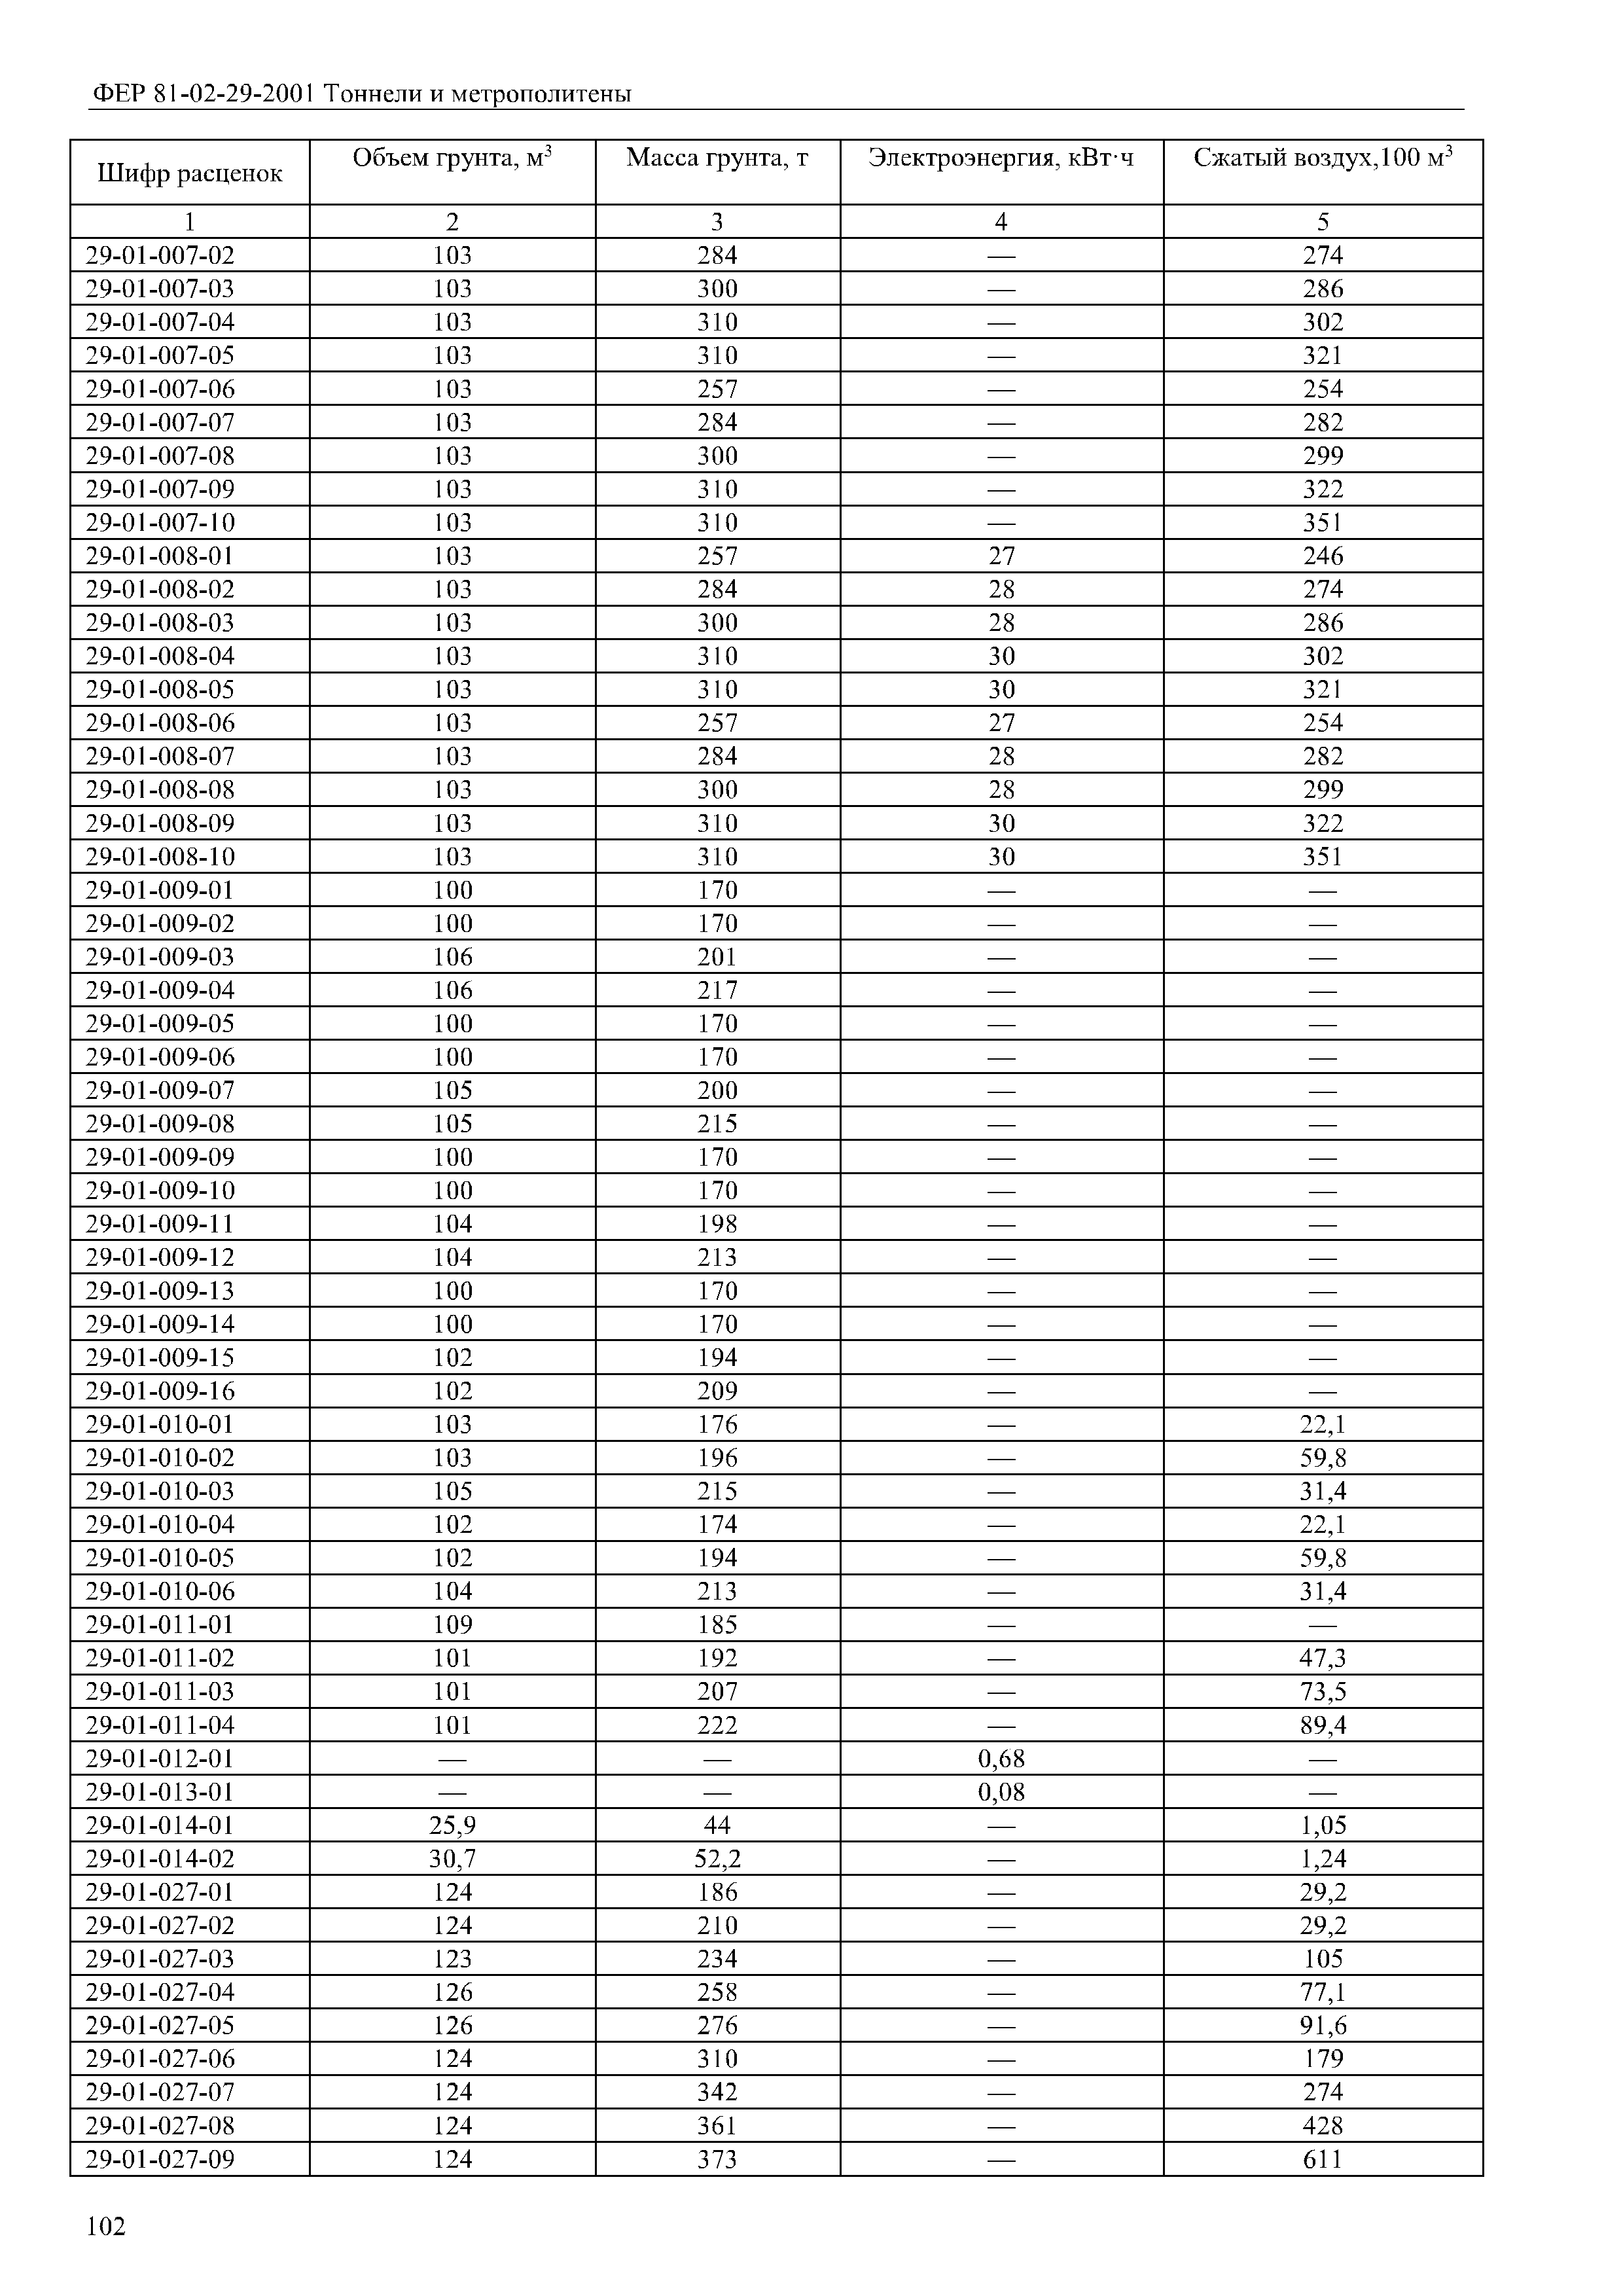 М5 какая резьба. Таблица метрических резьб м70. Стандарты метрической резьбы таблица. Таблица резьб метрических основных и мелких шагов. Резьба для плашка м8 таблица.